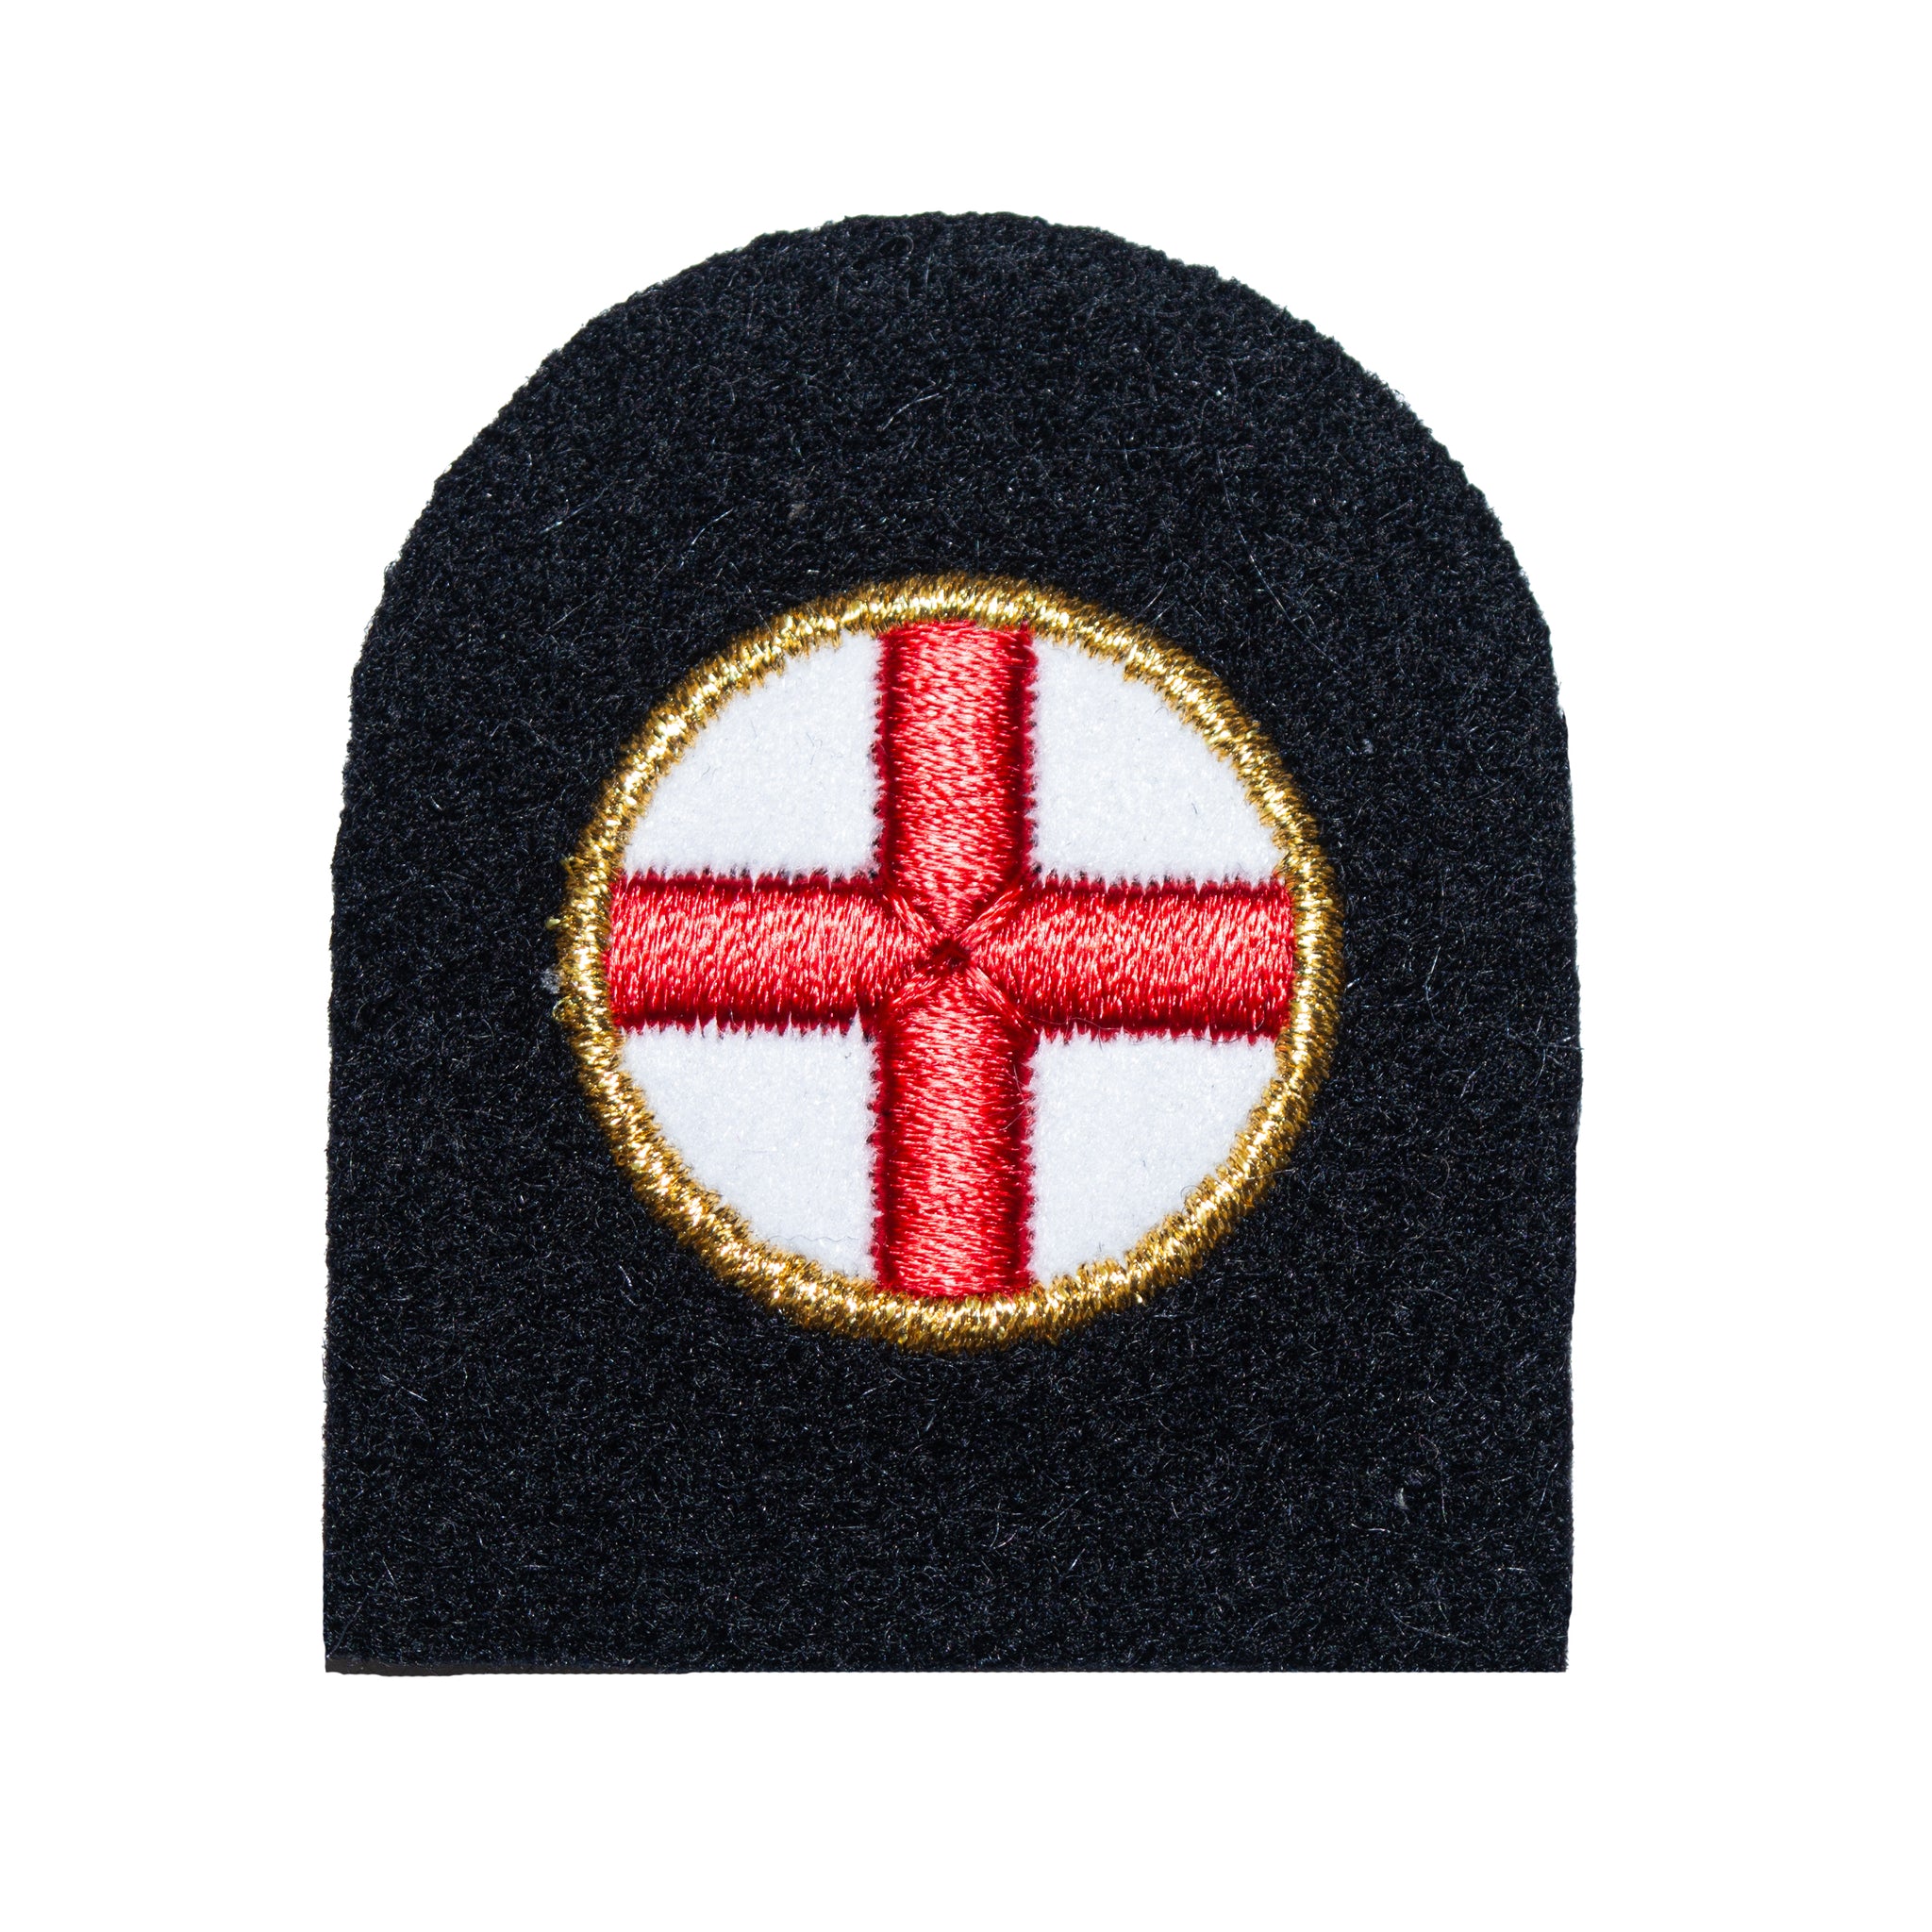 First Aid Sea Cadet Badge